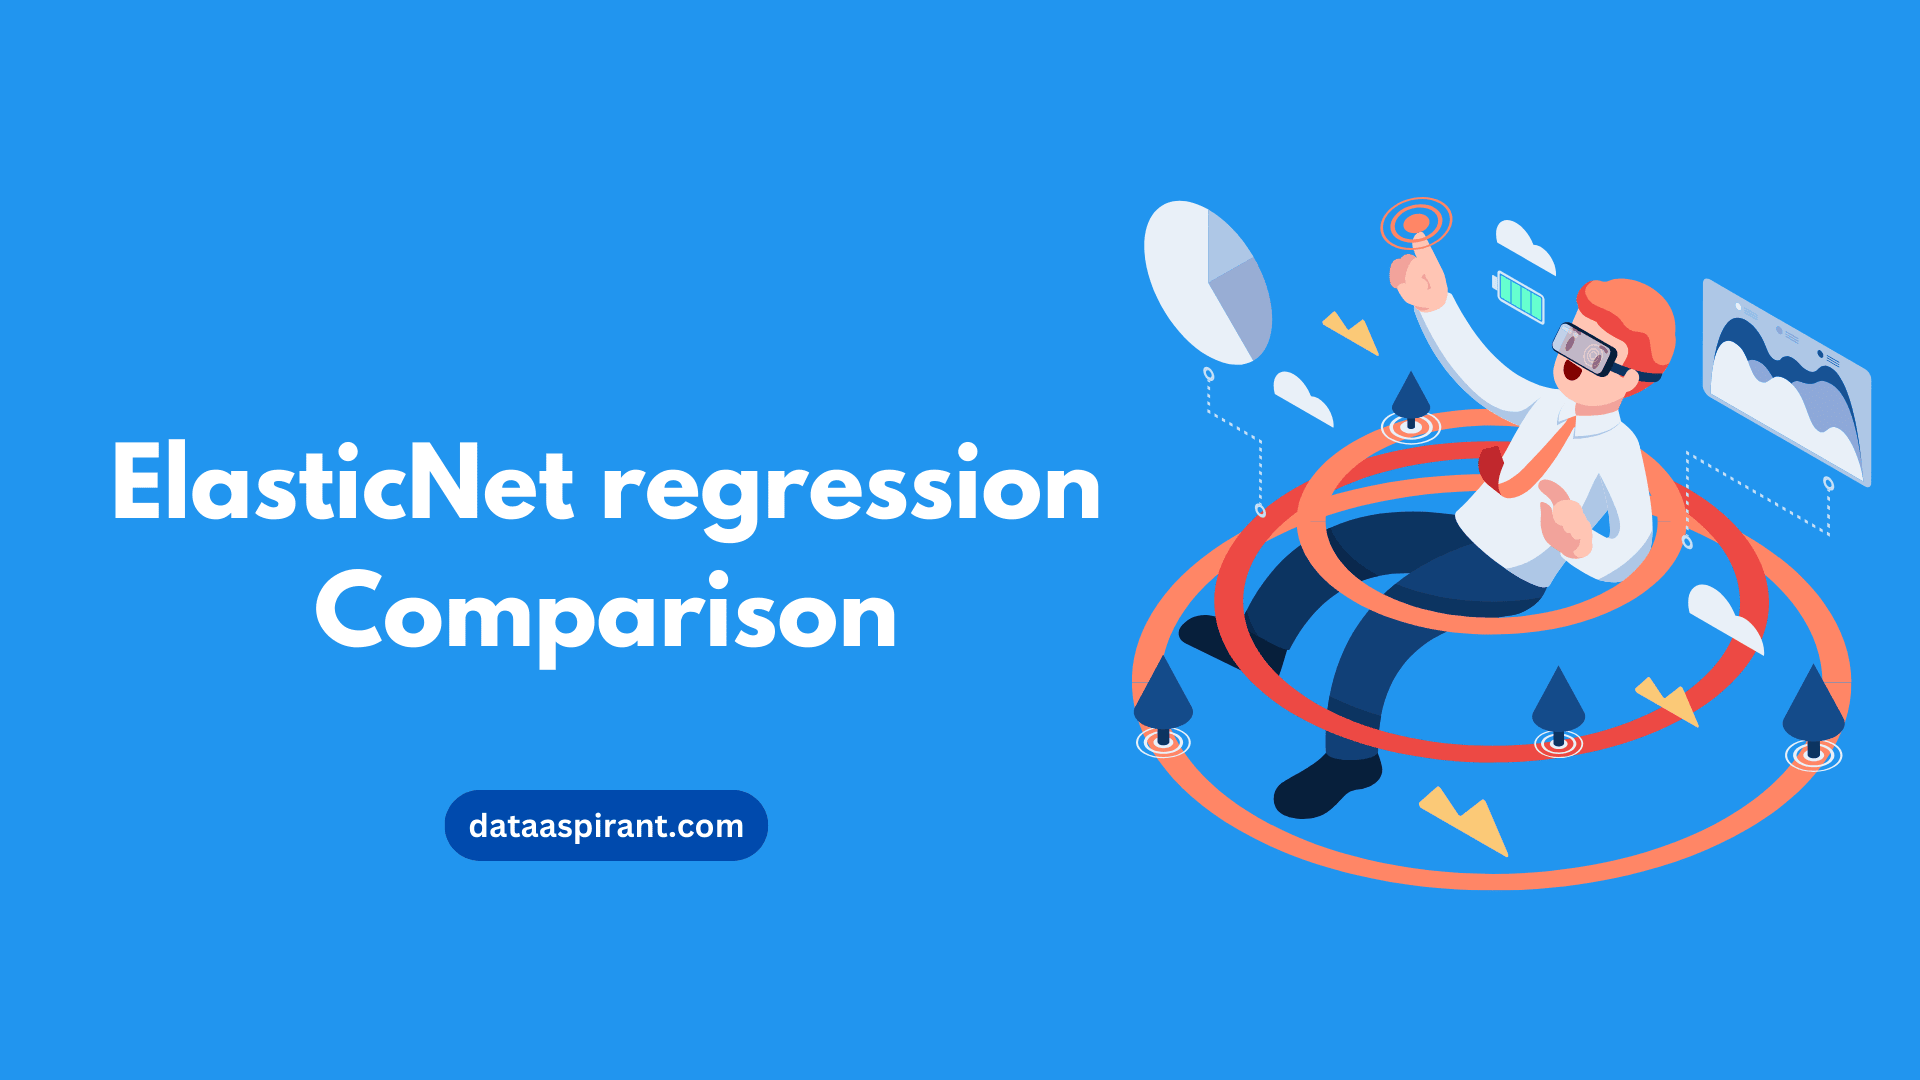 Comparing ElasticNet regression with L1 & L2 regularization techniques